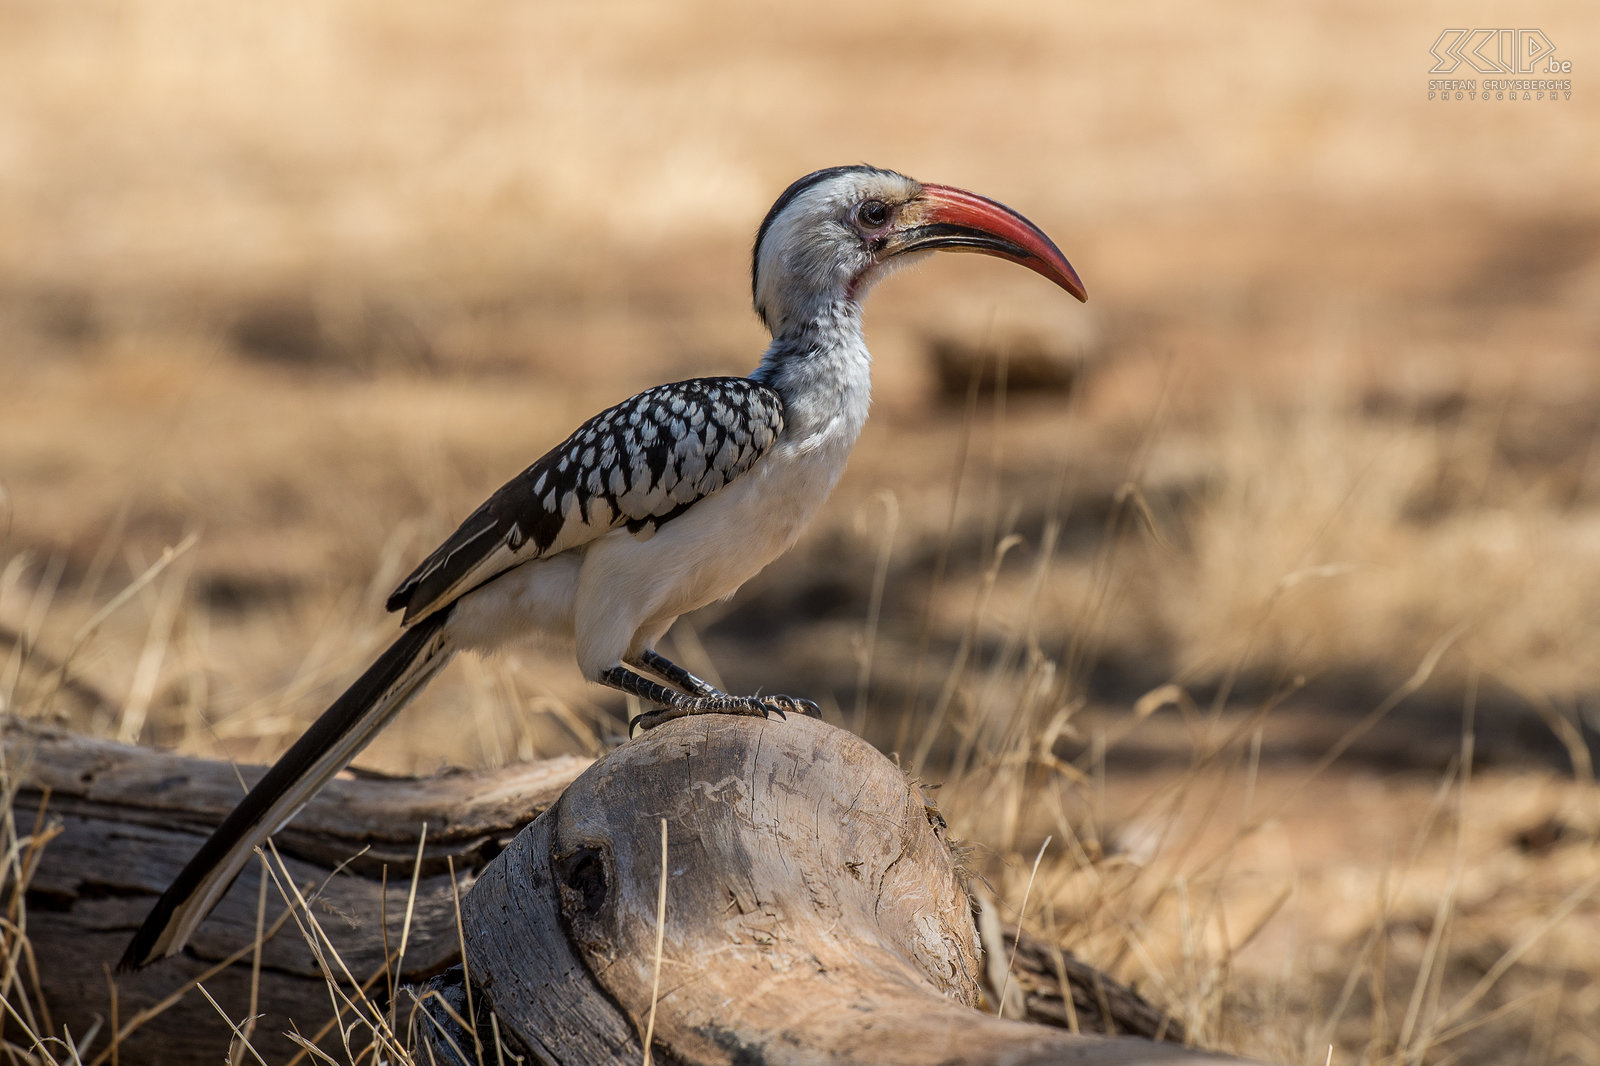 Samburu - Red-billed hornbill The red-billed hornbill (Tockus erythrorhynchus) is very common in the savannah in Eastern Africa. Stefan Cruysberghs